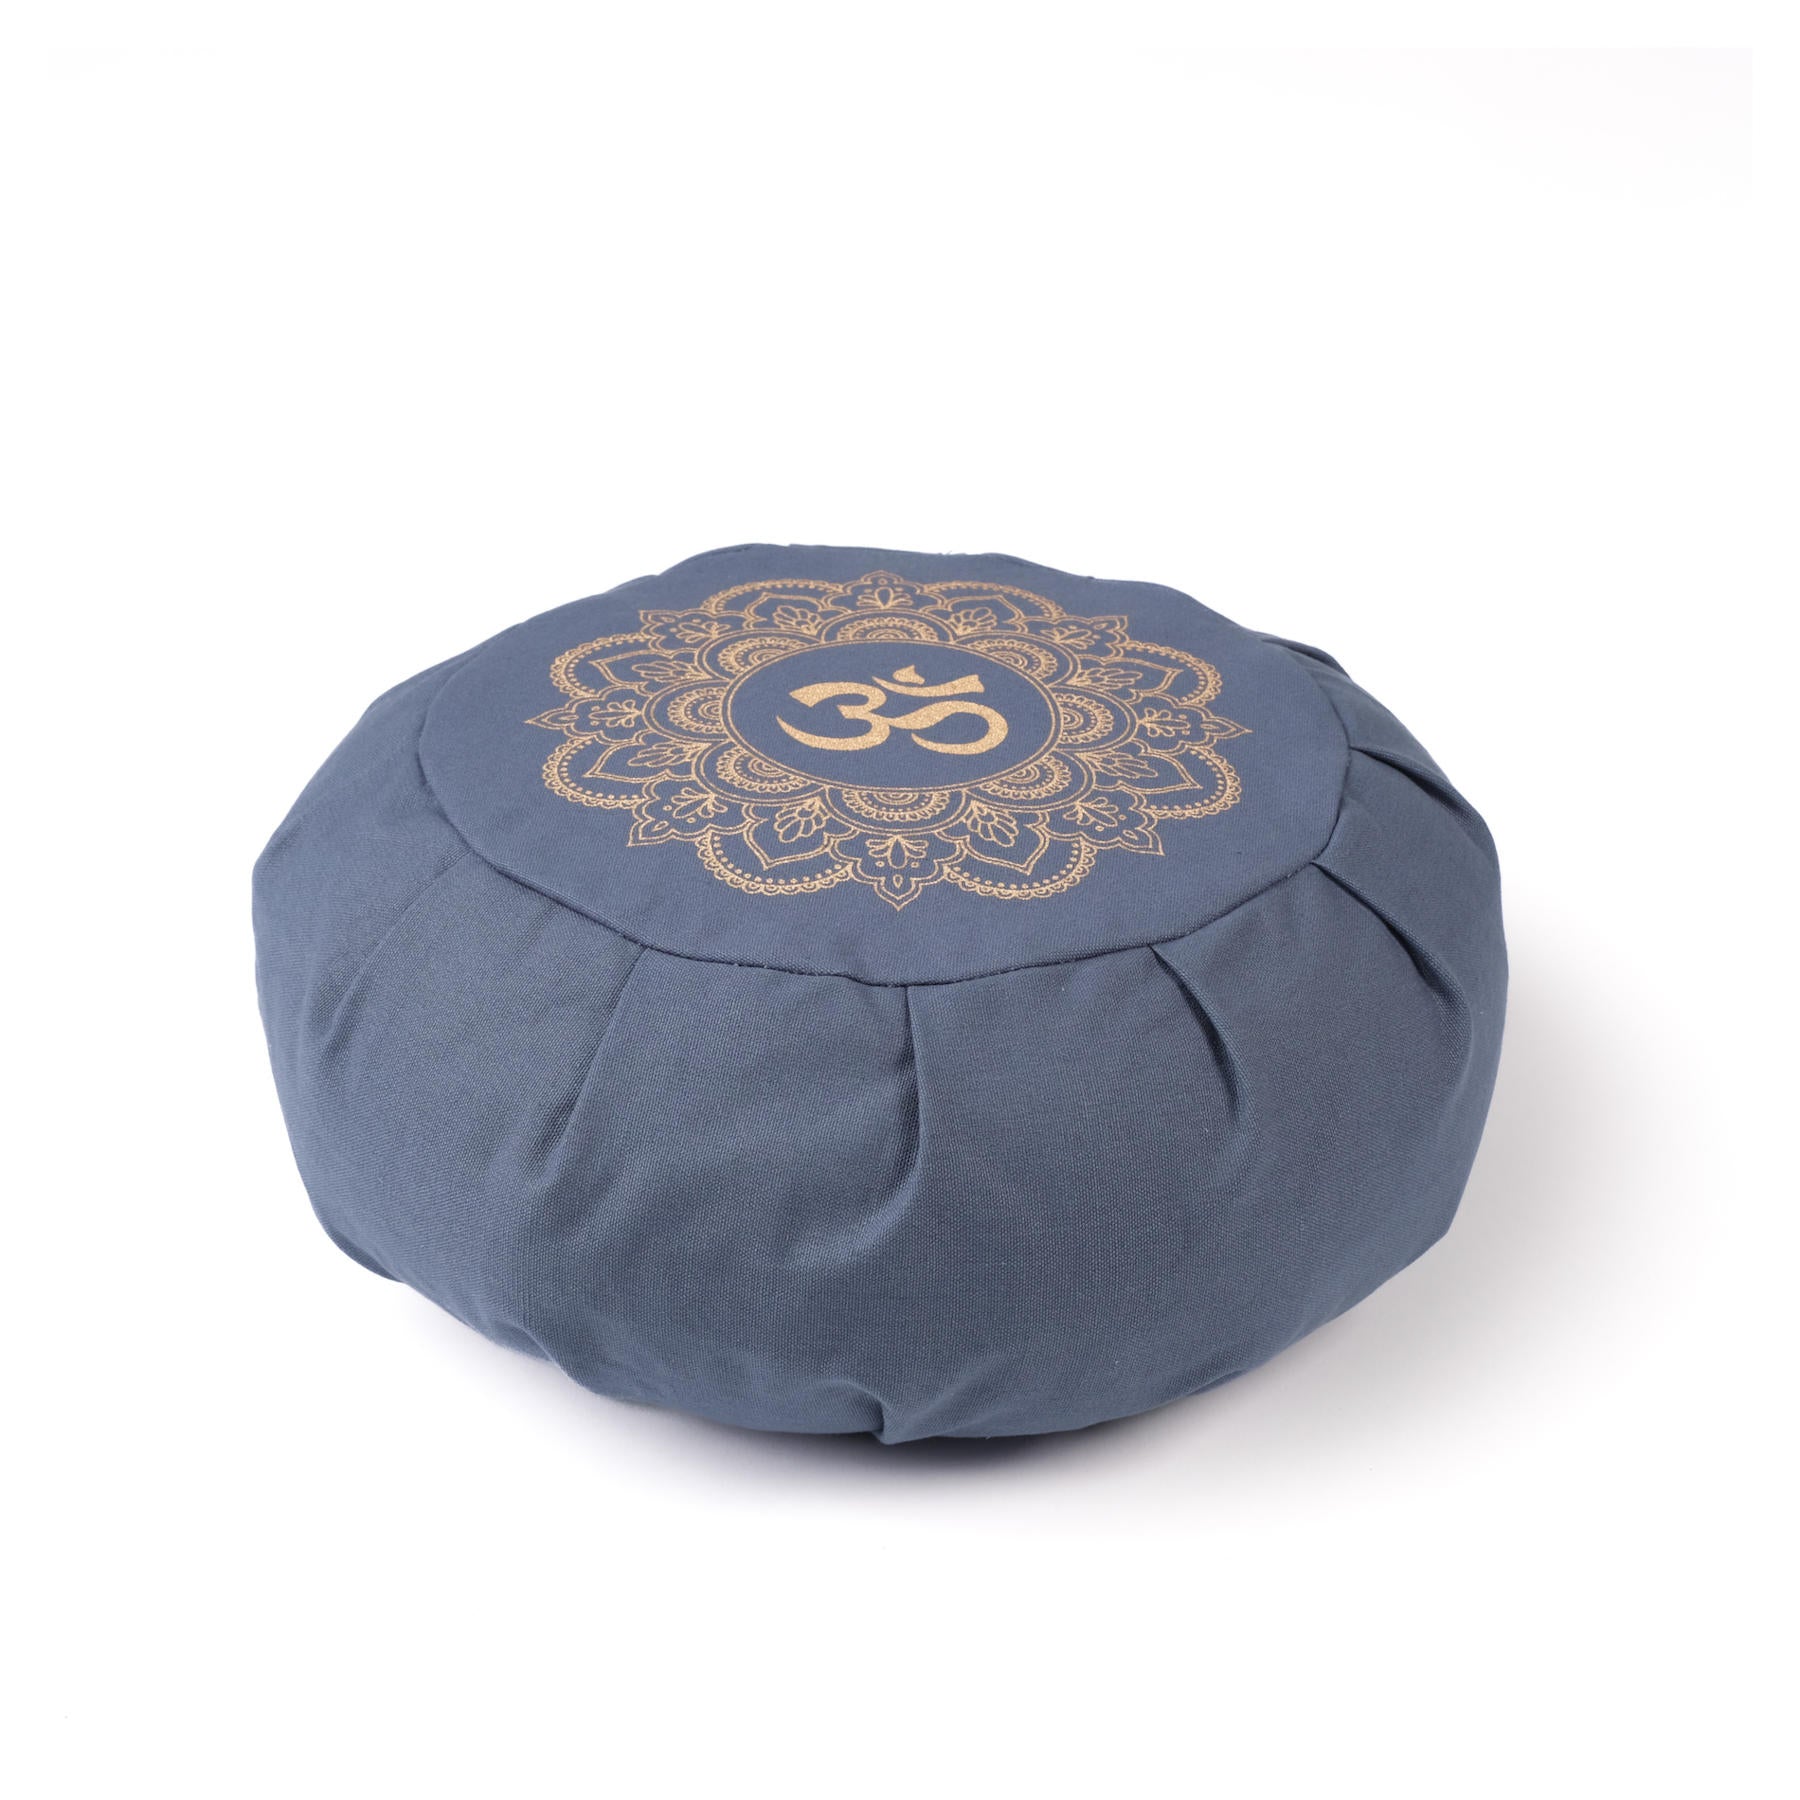 Cuscino da meditazione Zafu in cotone organico con stampa oro Mandala OM blue-sky